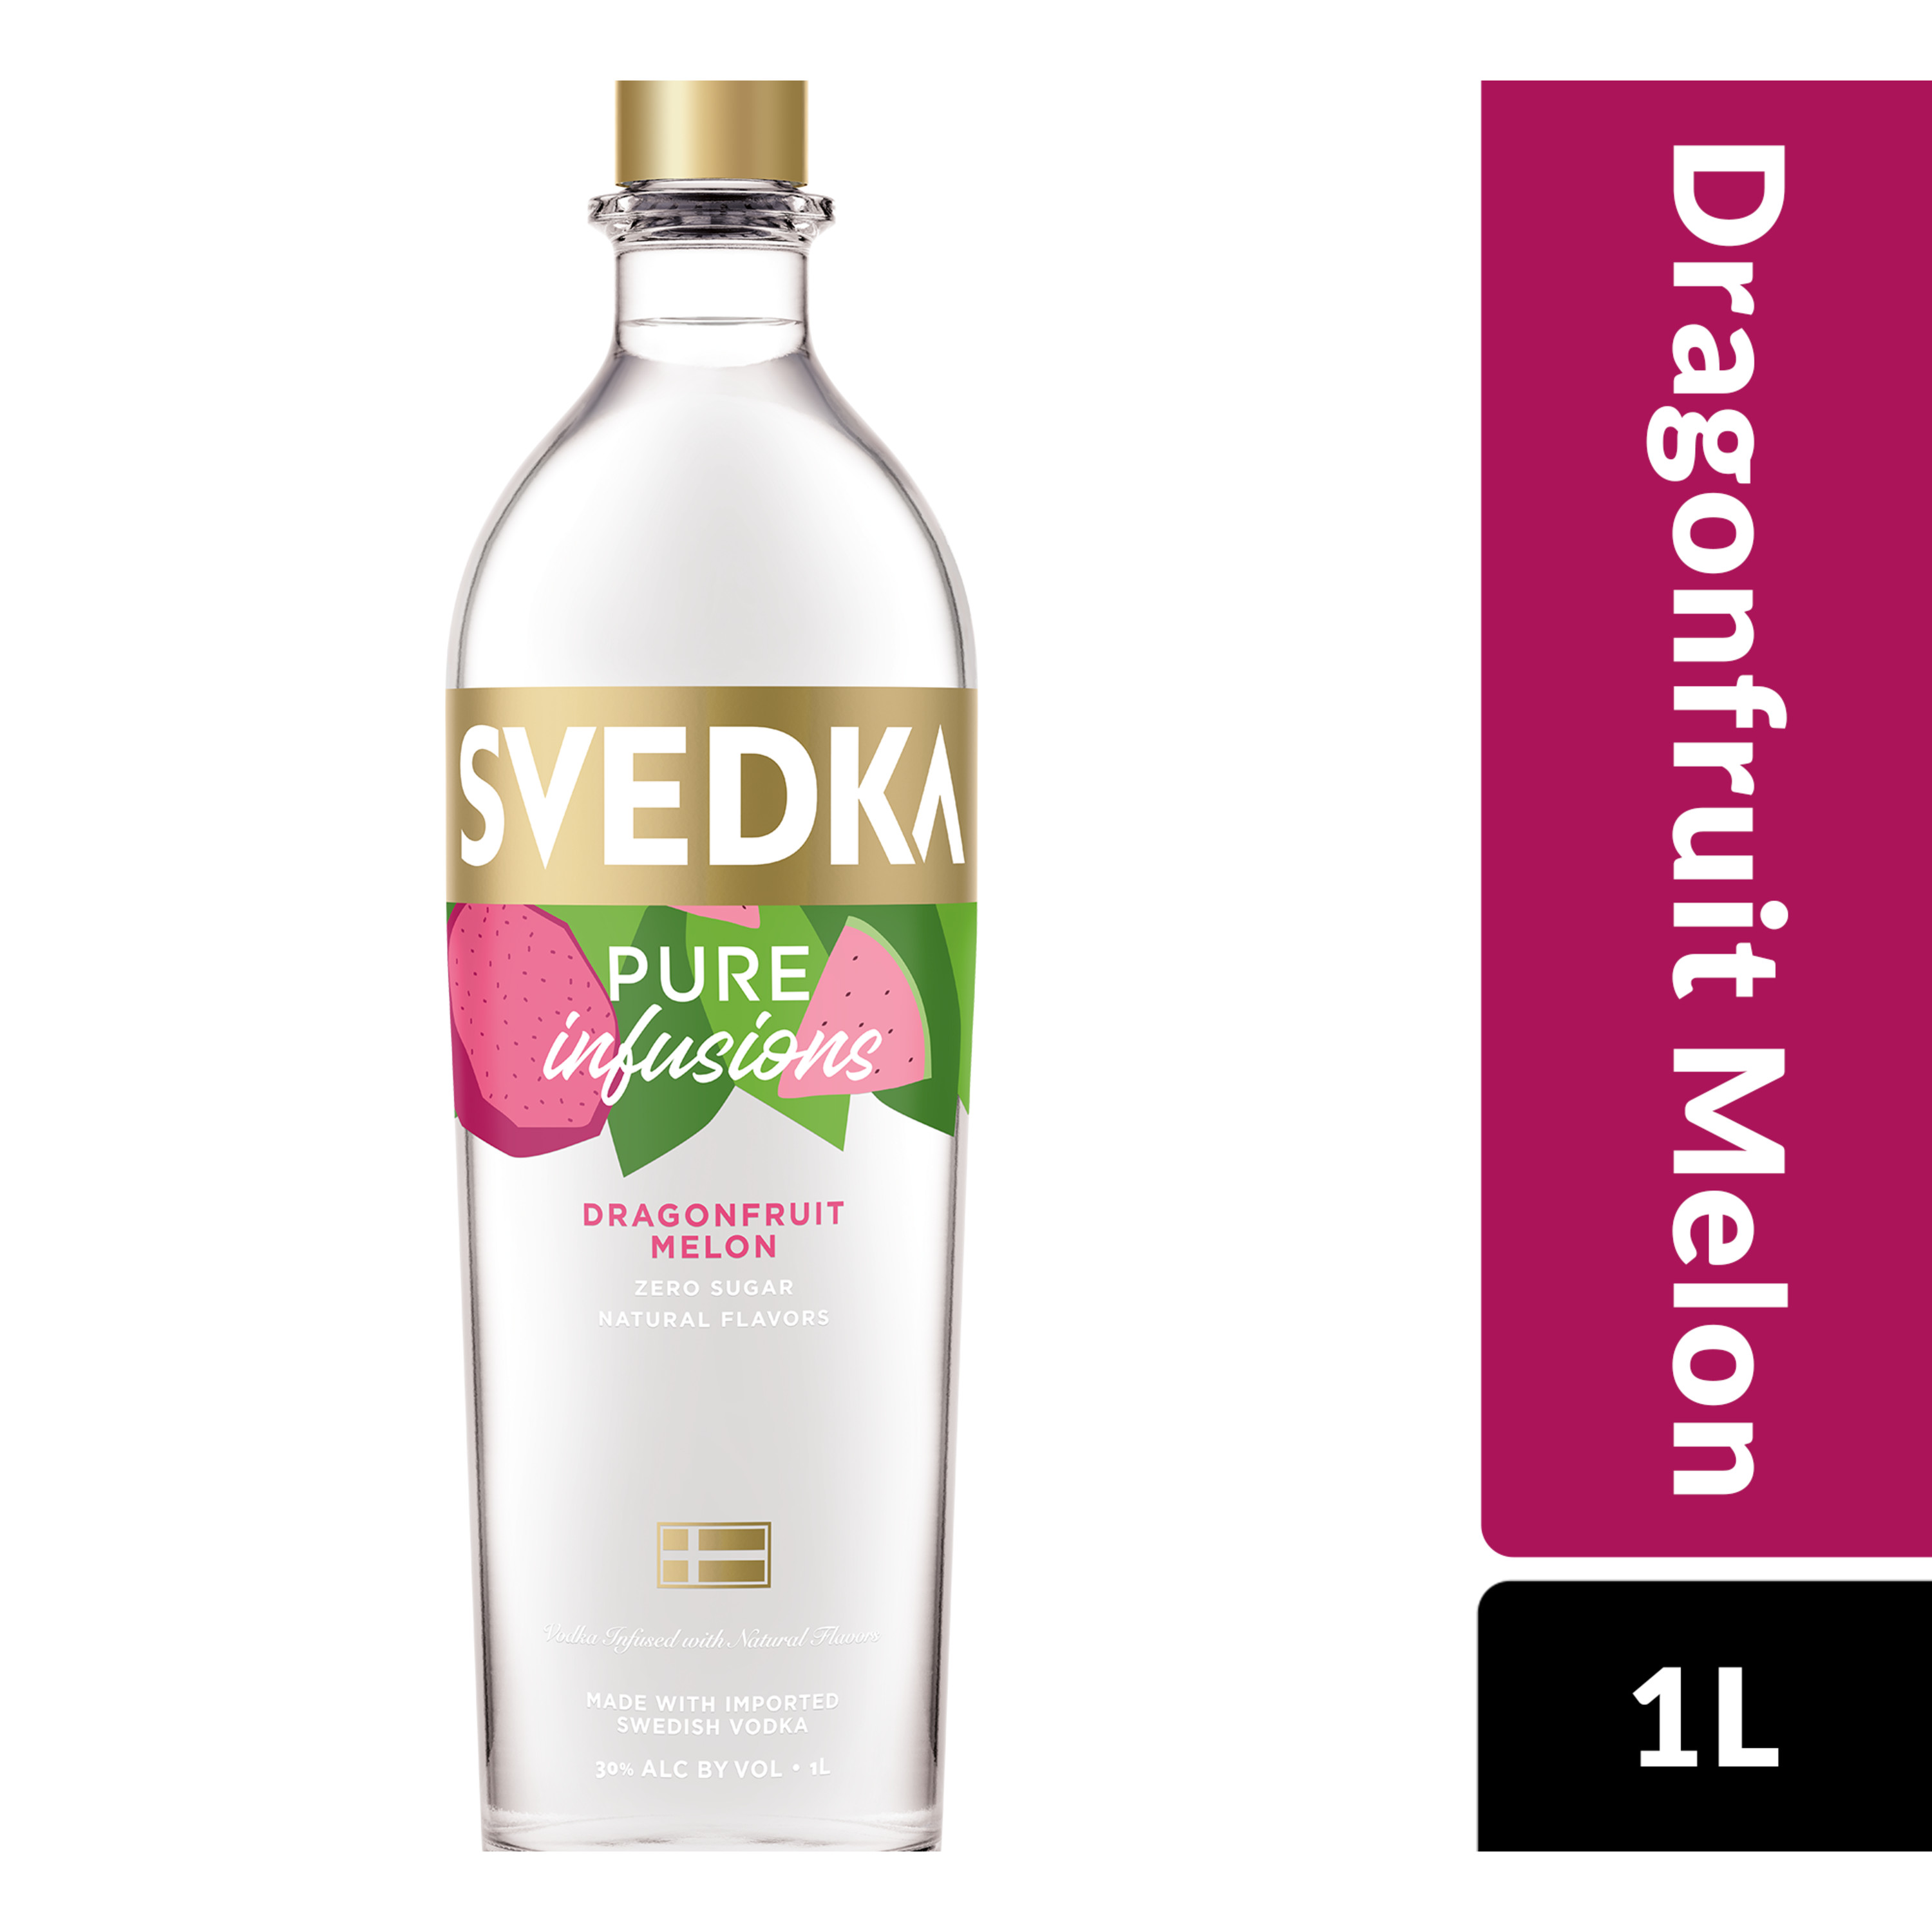 Svedka Pure Infusions Dragonfruit Melon Flavored Vodka L Bottle